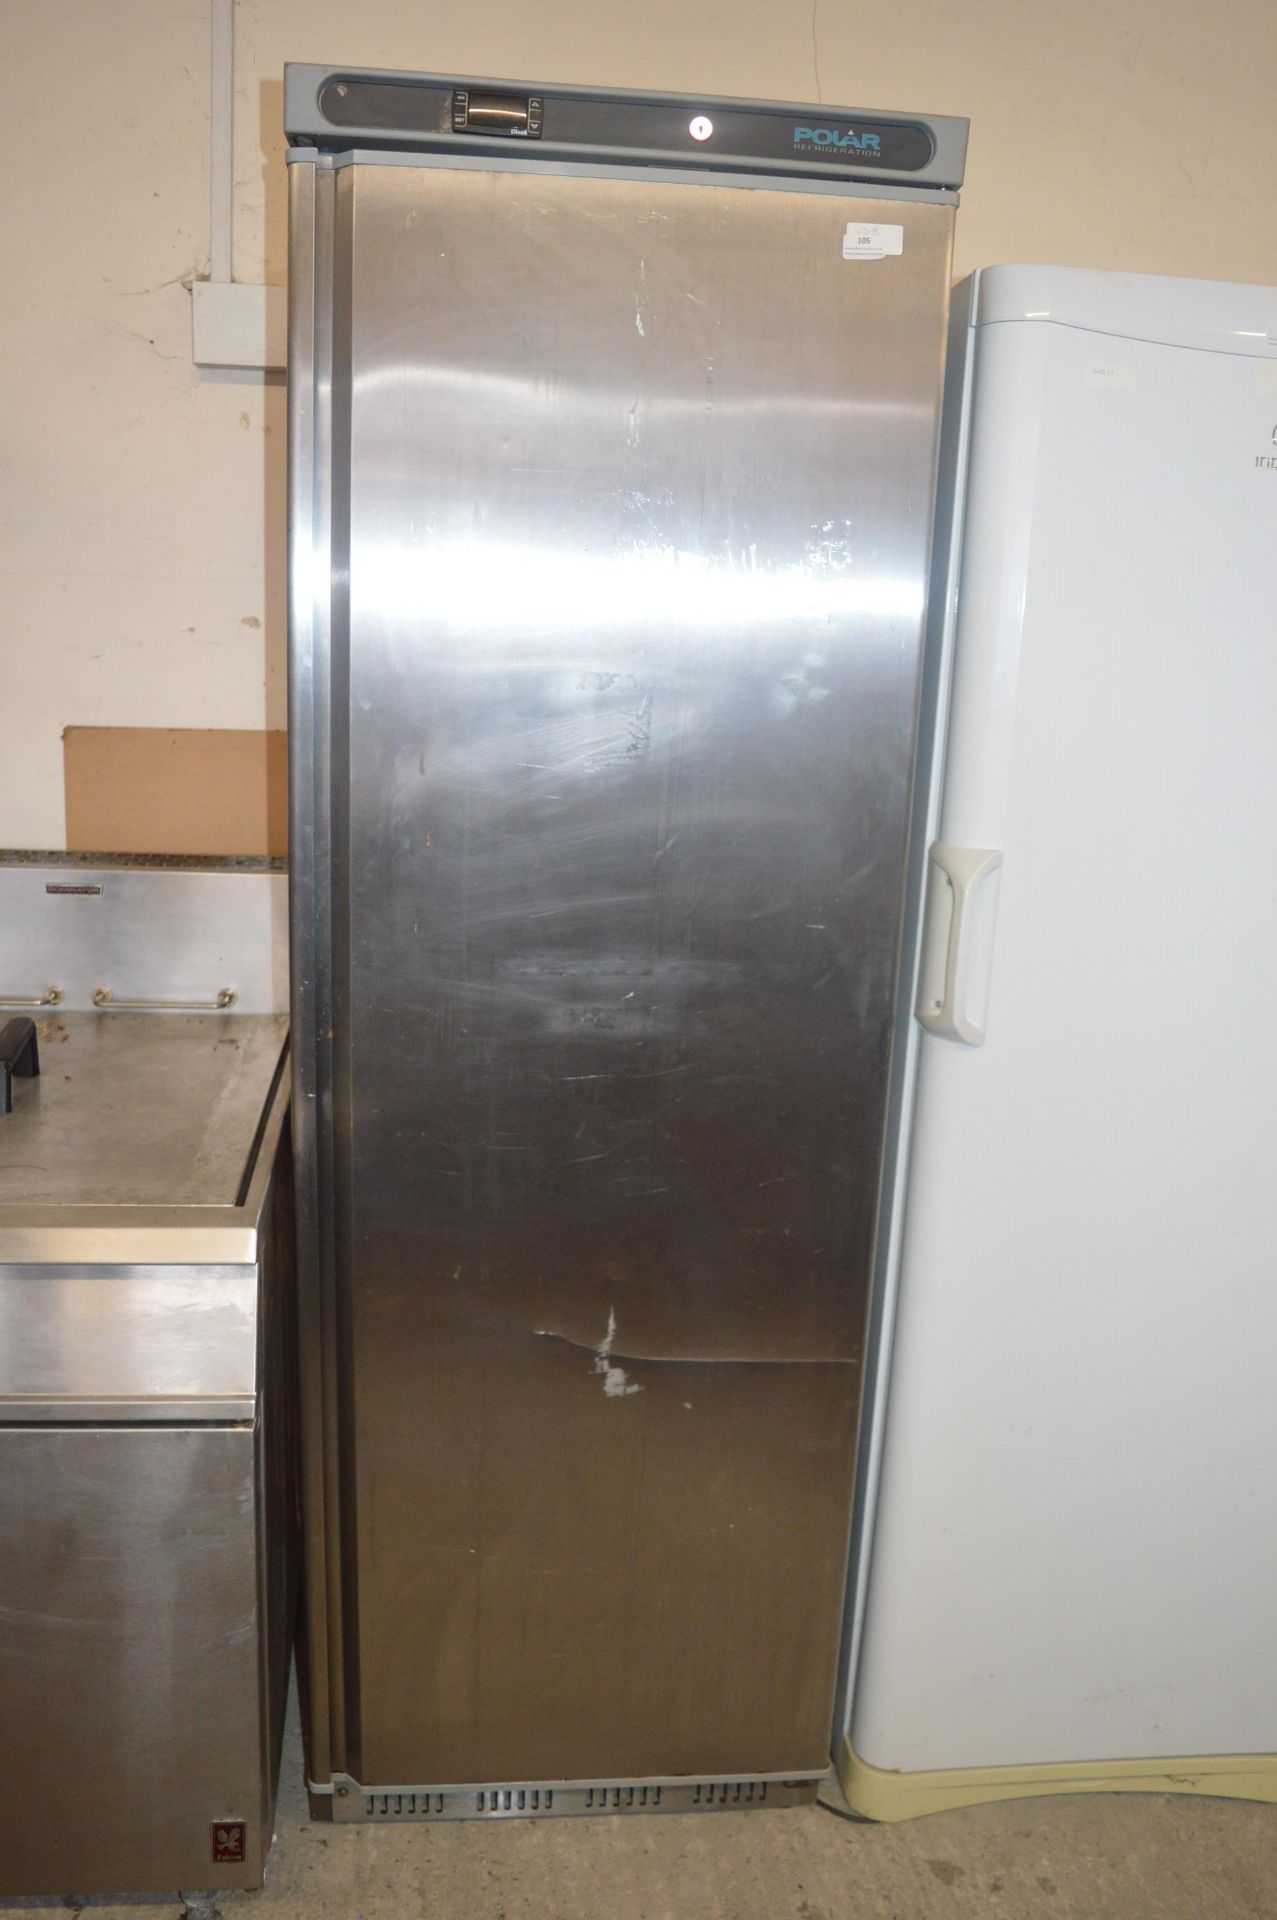 Polar Stainless Steel Upright Refrigerator